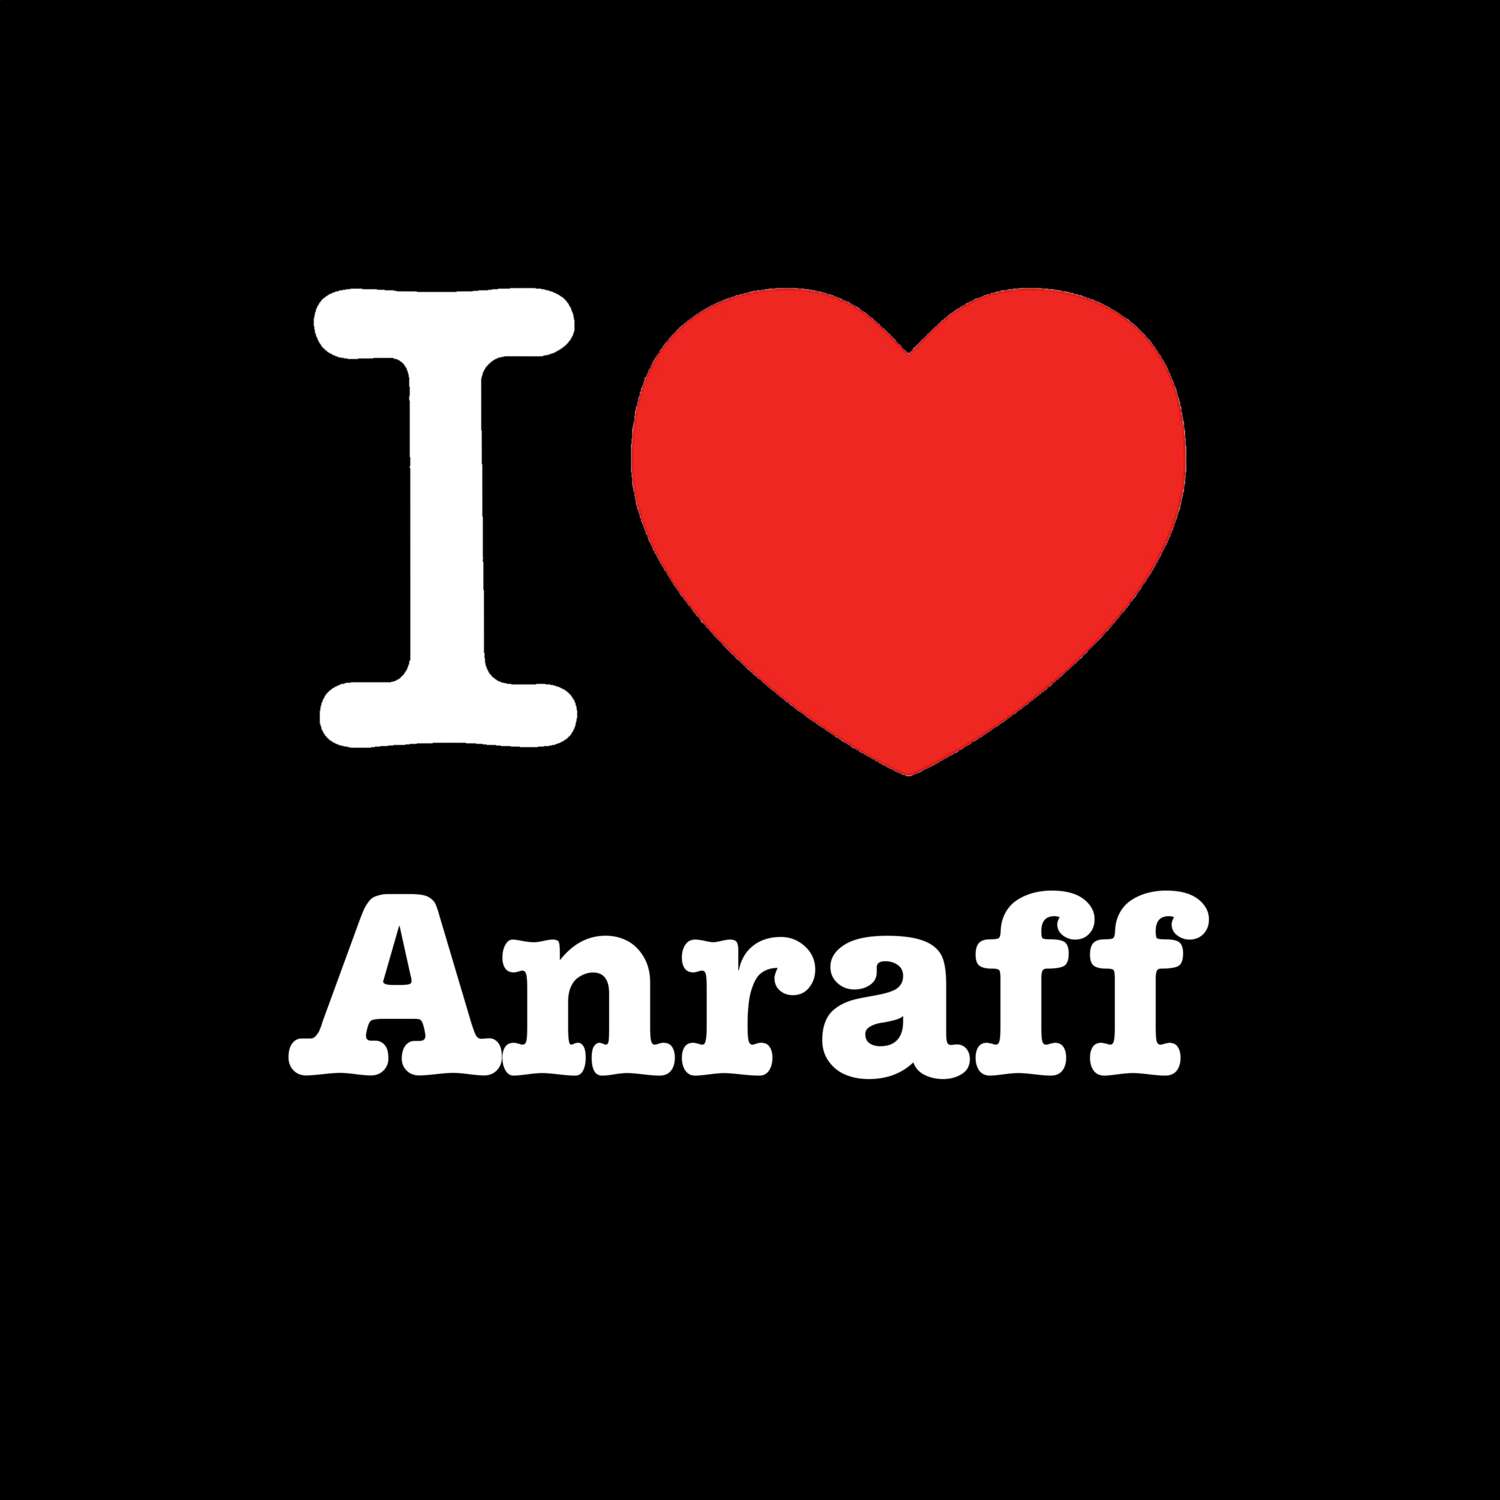 Anraff T-Shirt »I love«